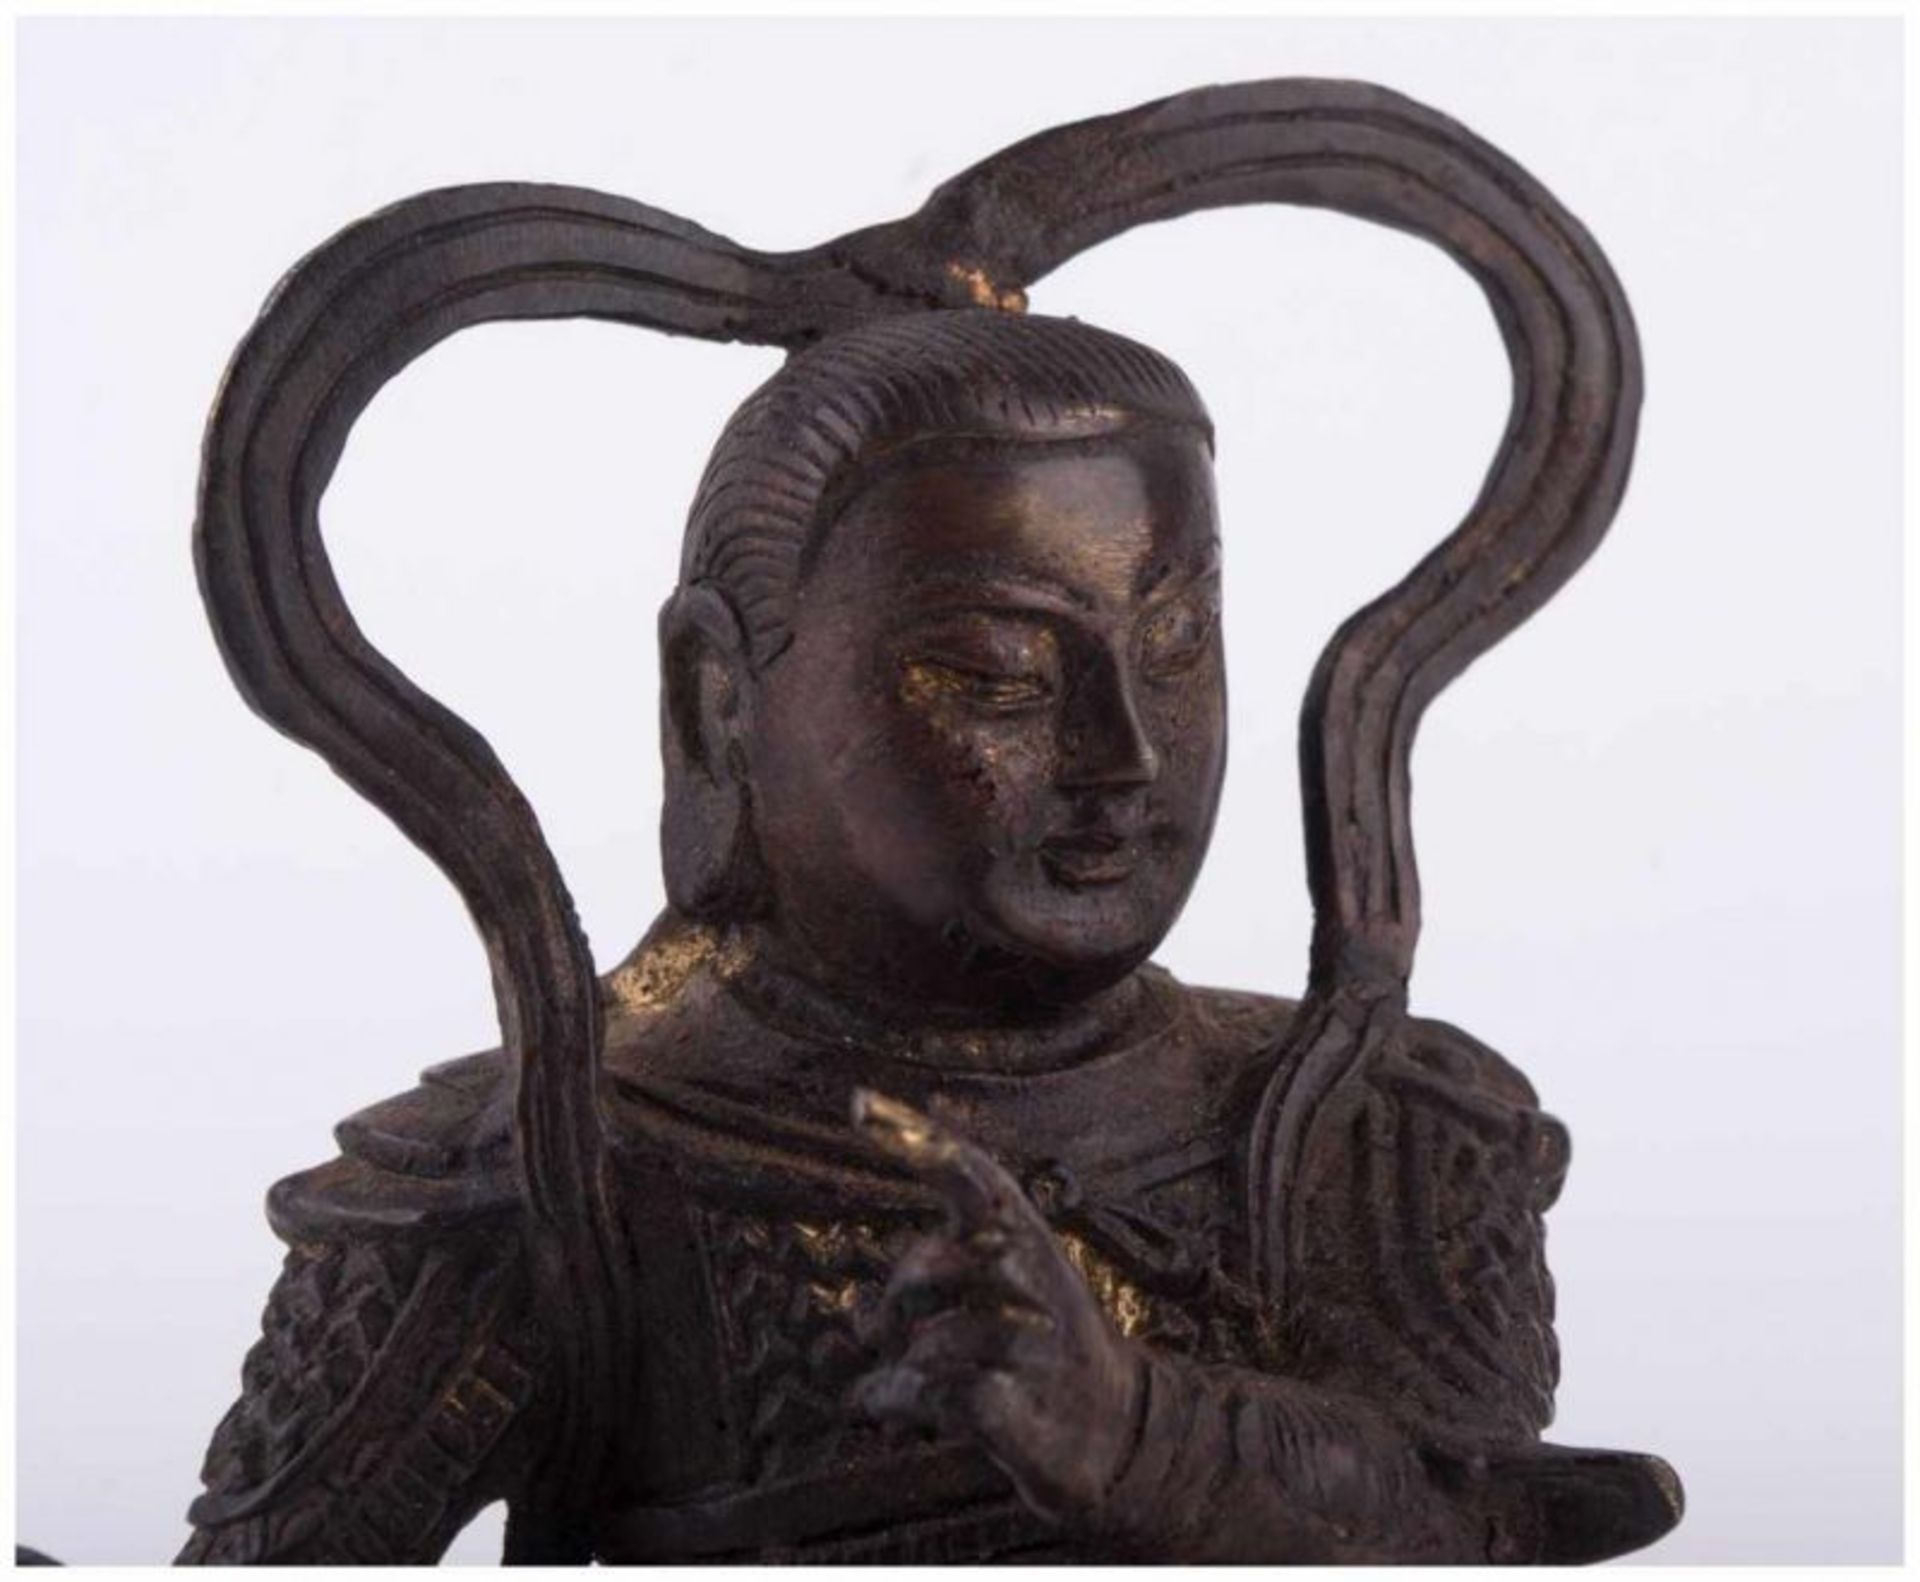 Alte Skulptur China / Old sculpture, China - Bronze, braun Patina mit Resten alter [...] - Image 6 of 14